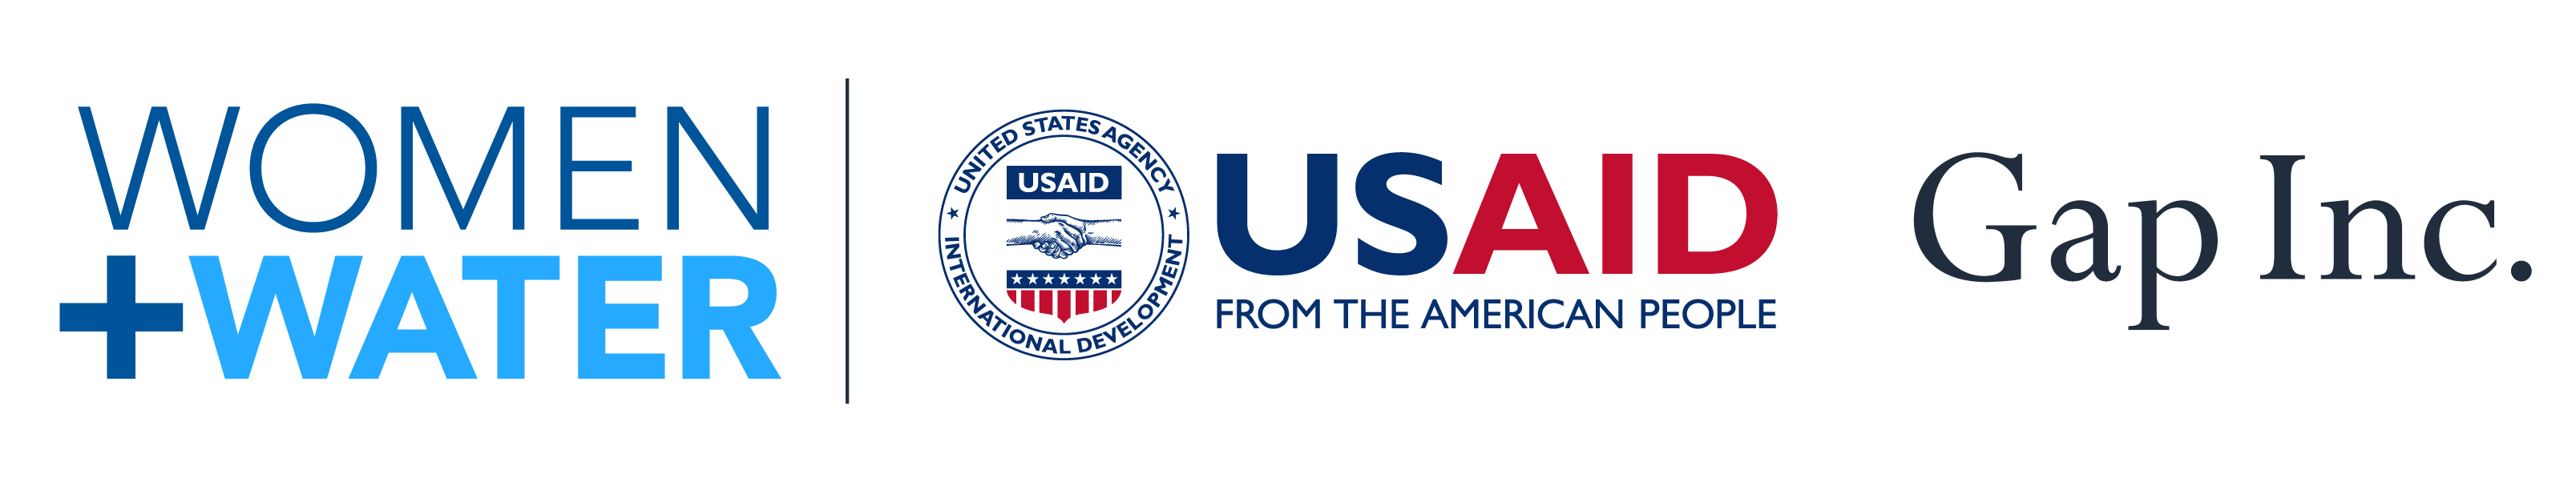 Women + Water Alliance USAID Gap Inc. Logo